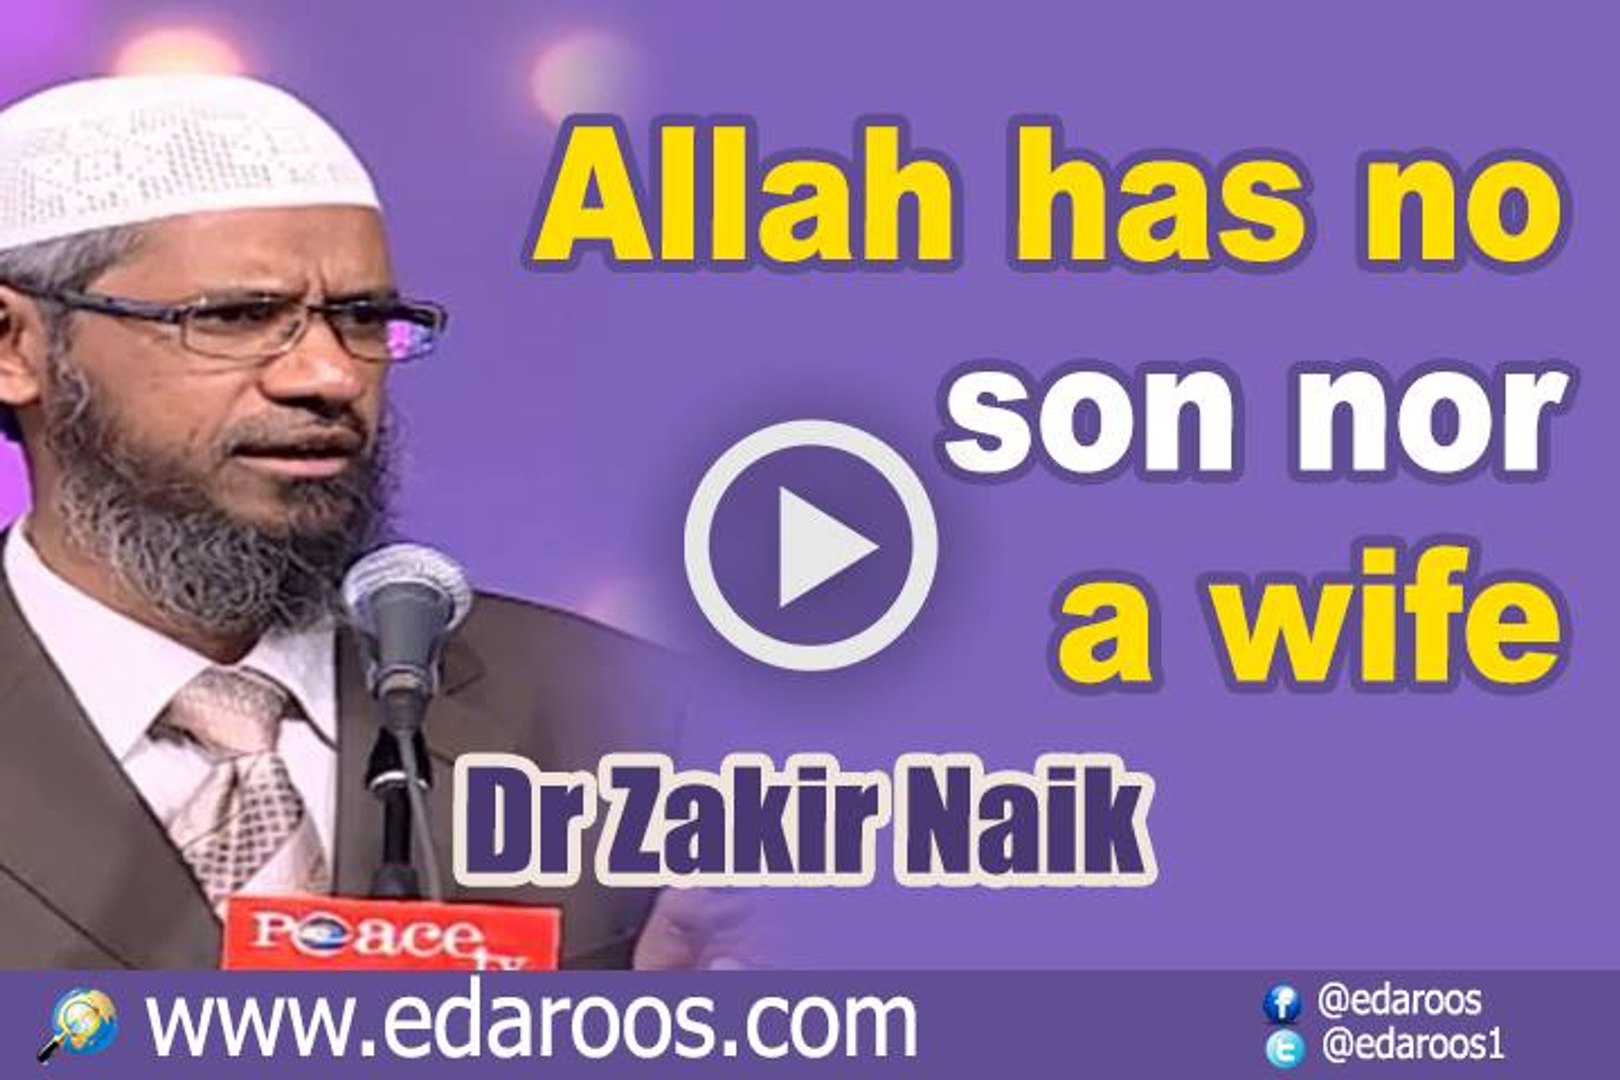 Dr zakir naik son